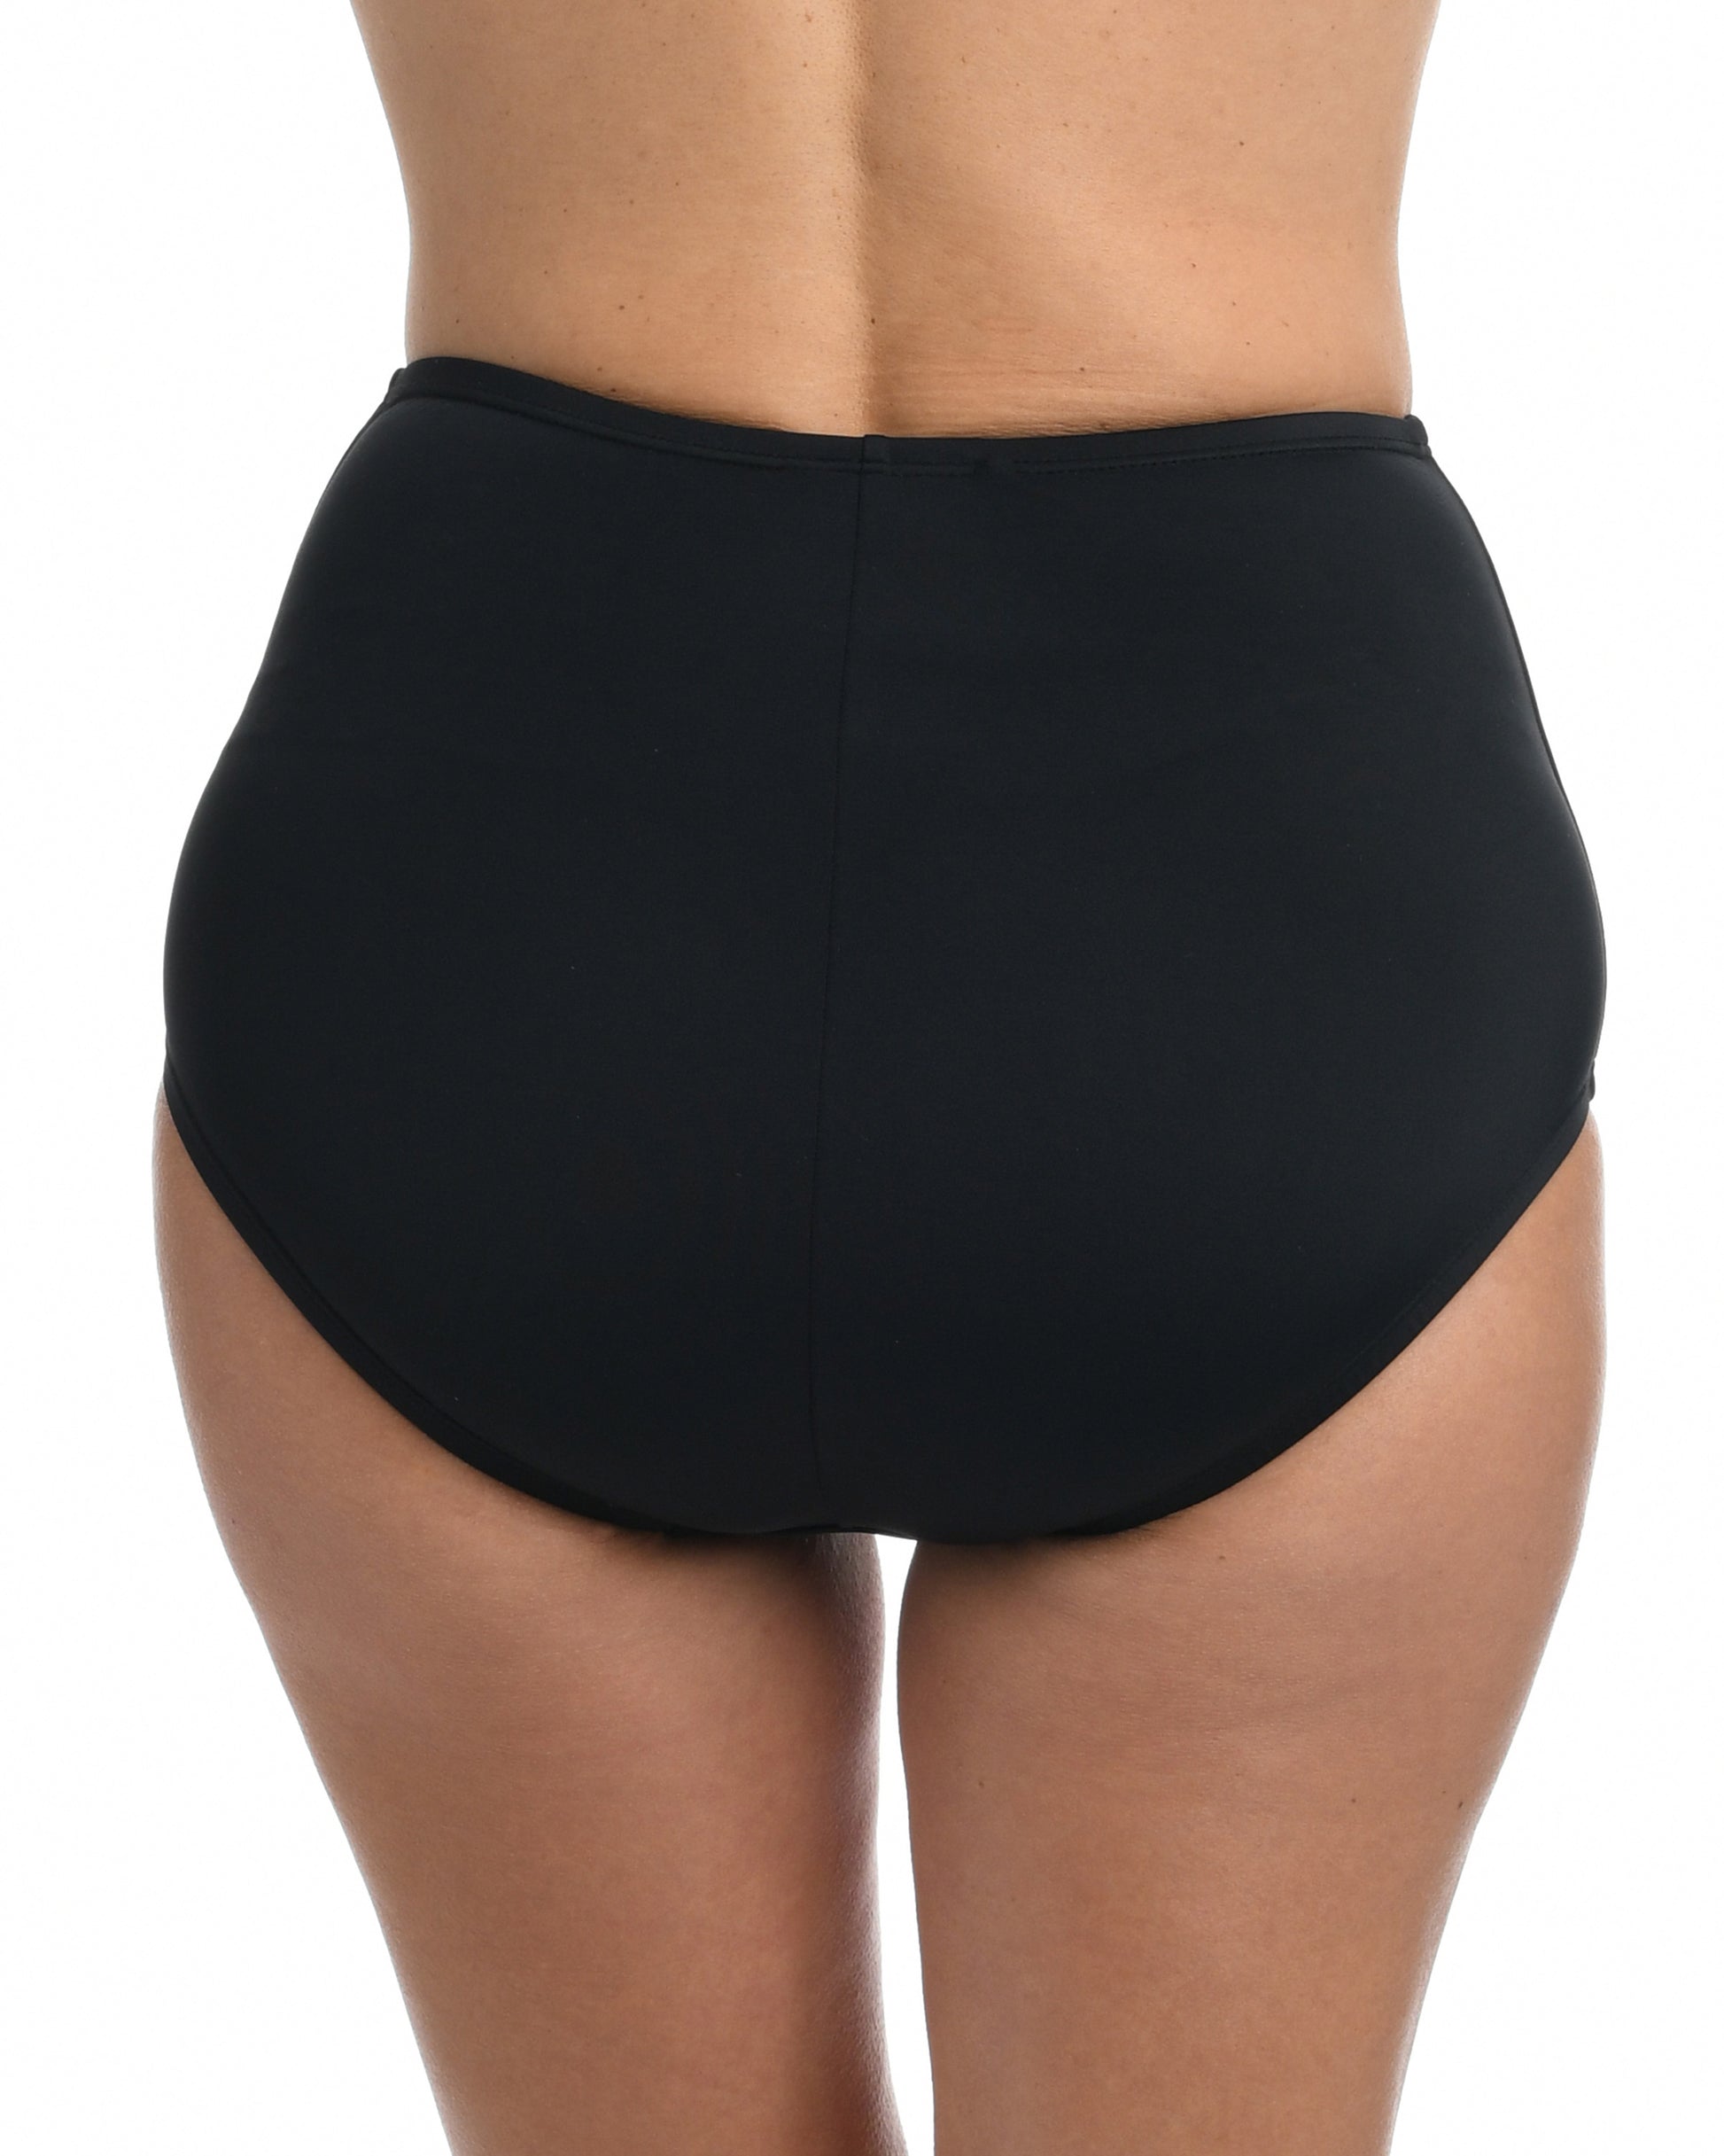 Model wearing a full brief bikini bottom in black